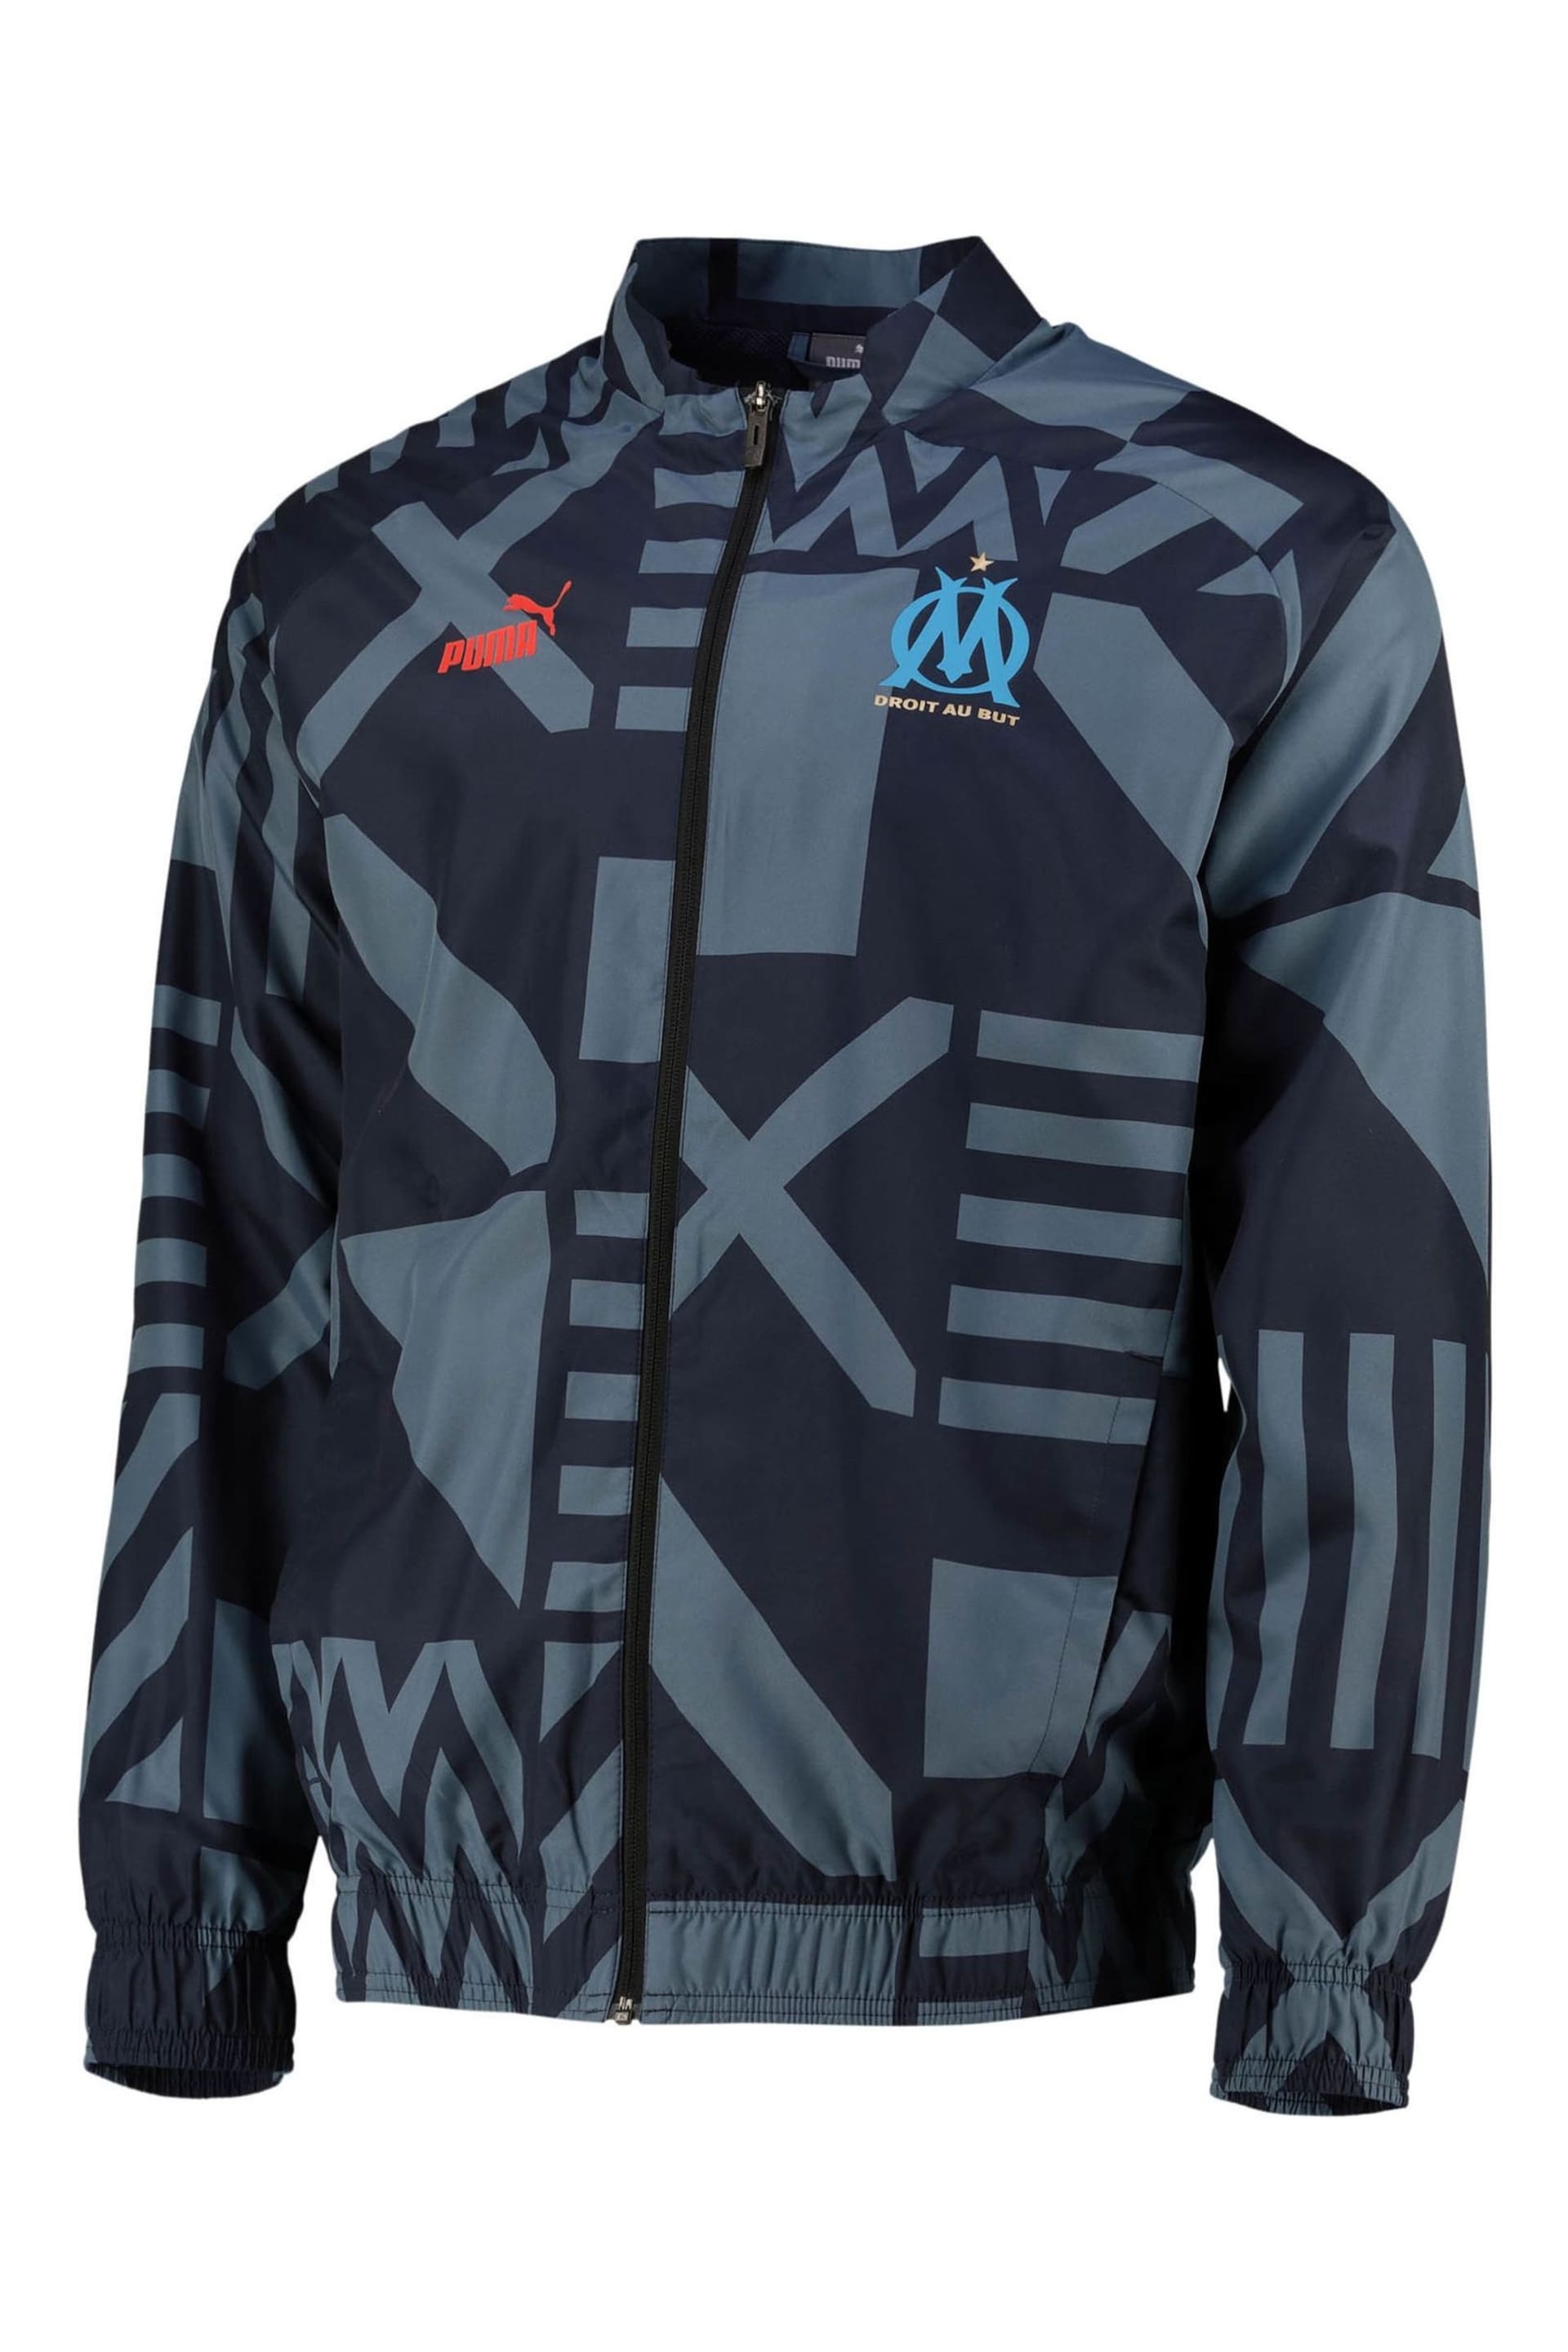 Puma Savoy Blue Olympique De Marseille Pre Match Jacket - Image 2 of 3